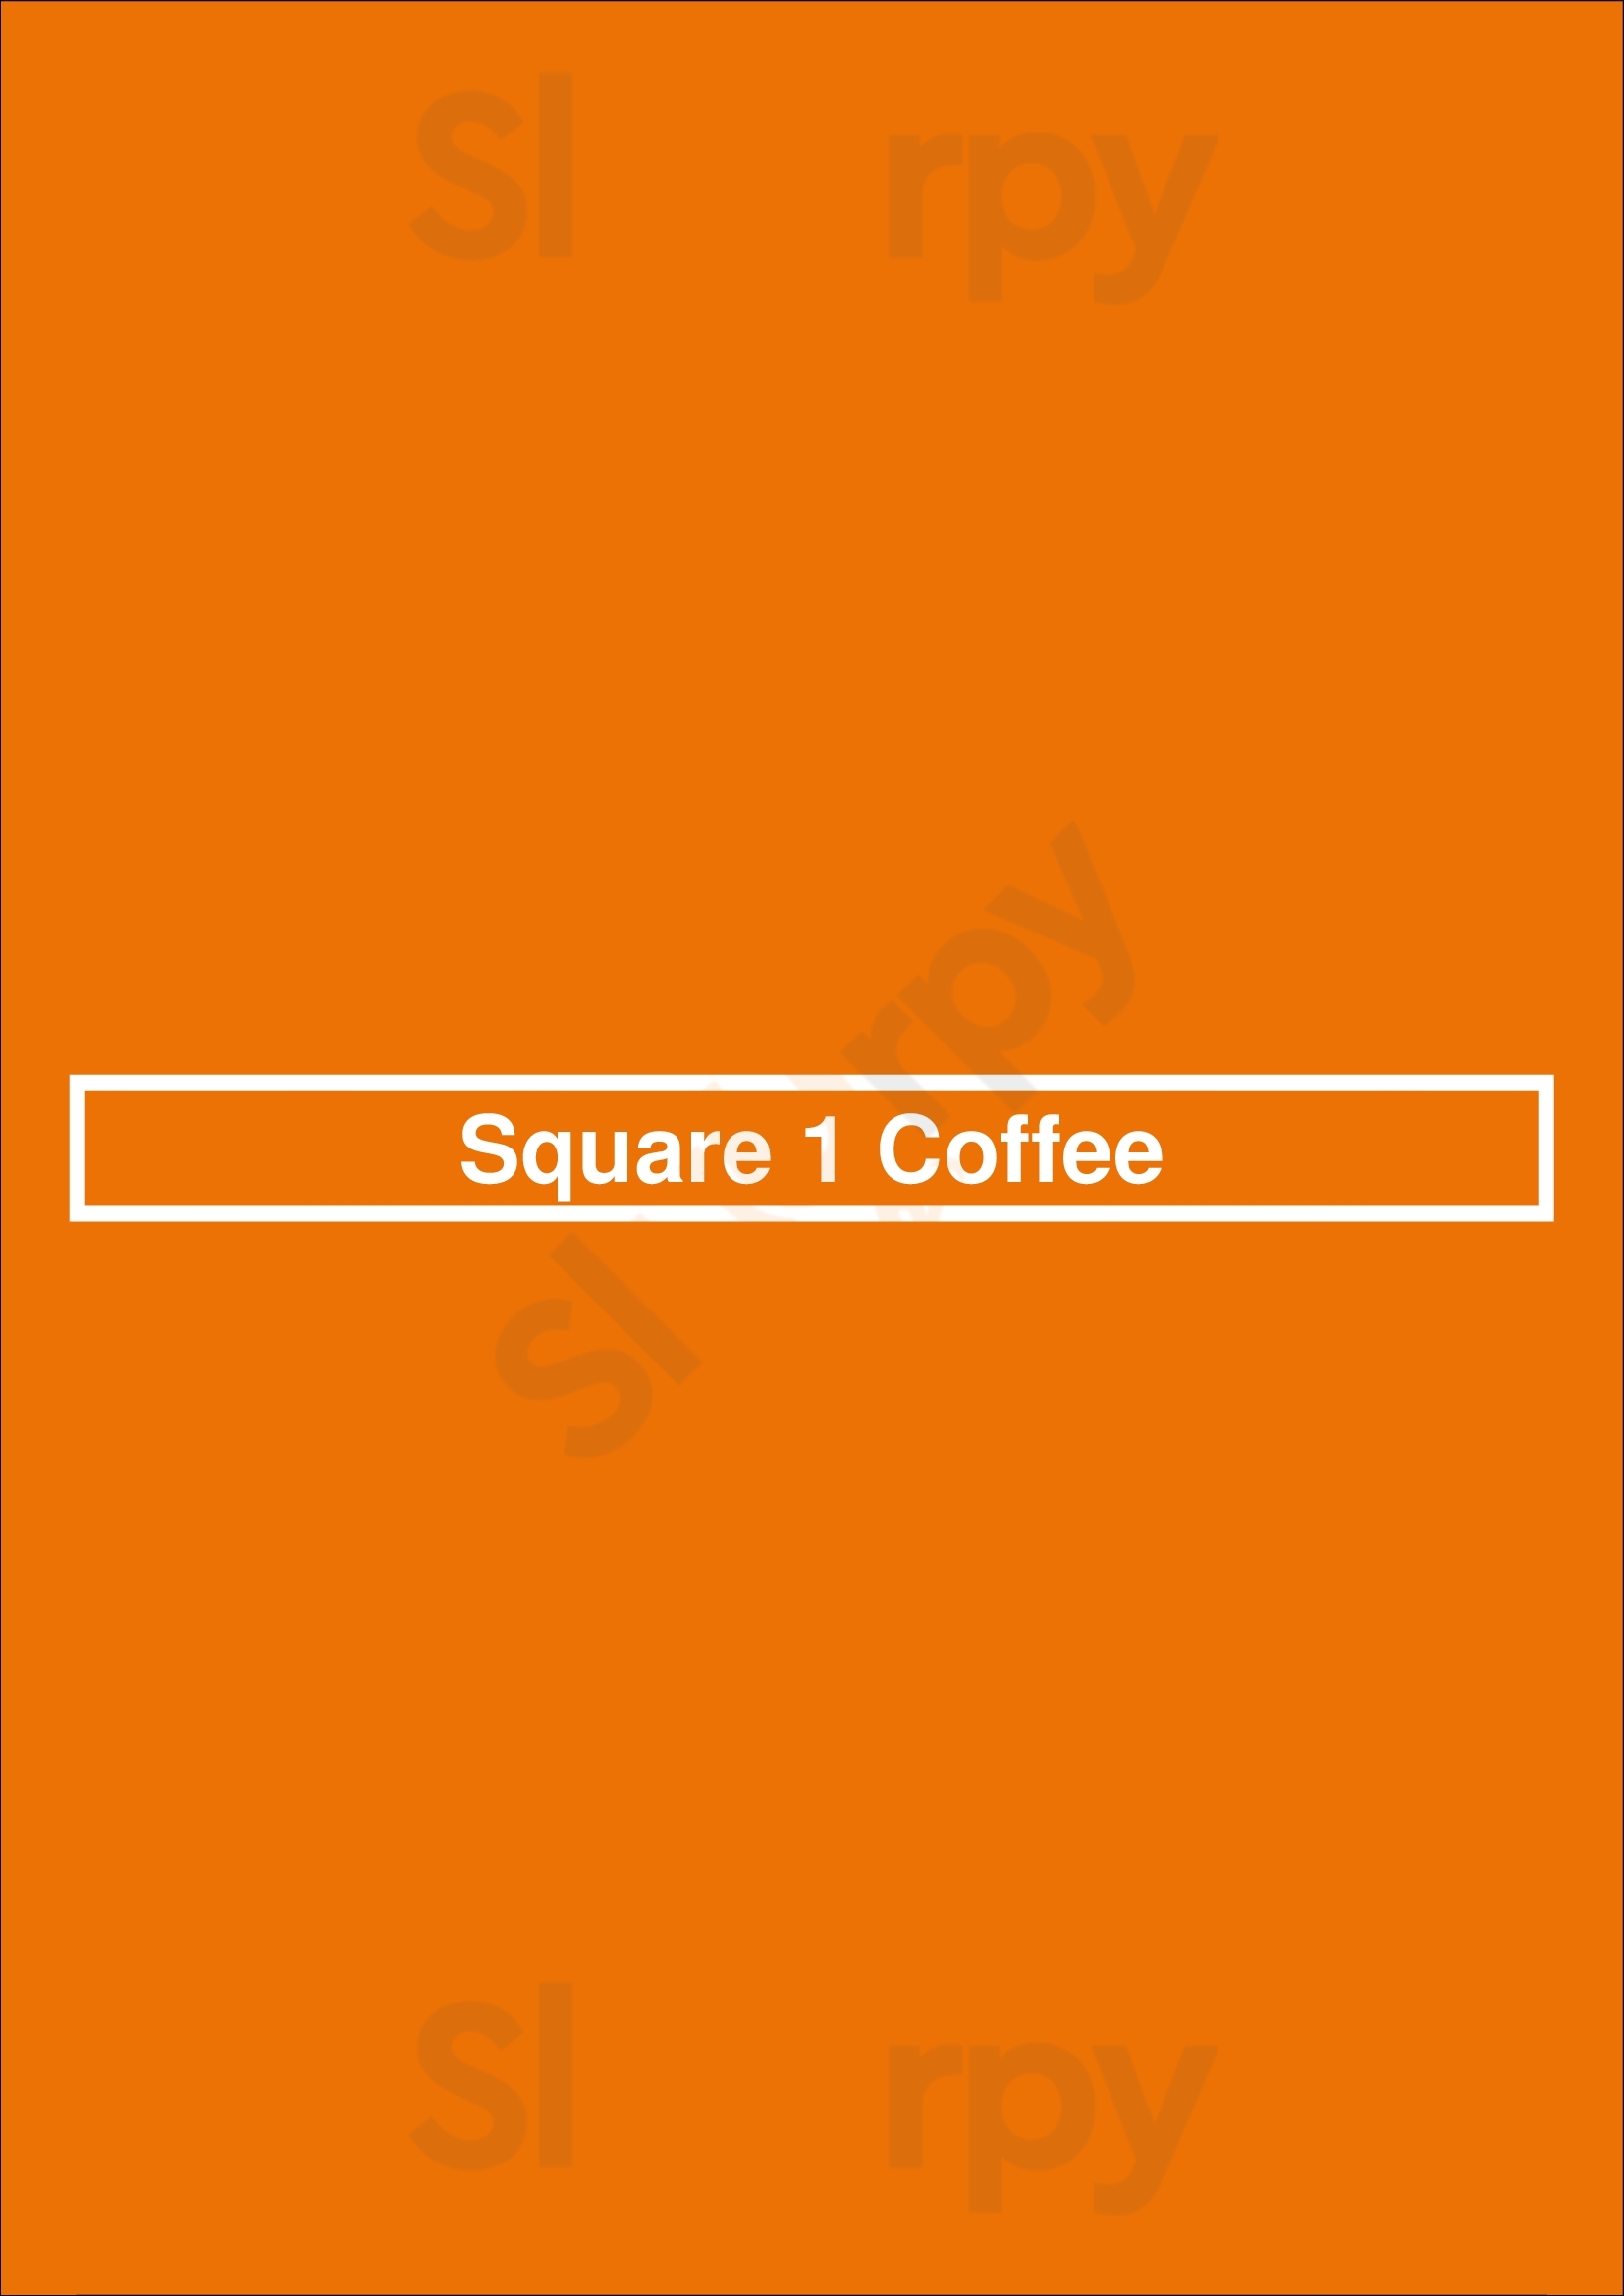 Square 1 Coffee Edmonton Menu - 1